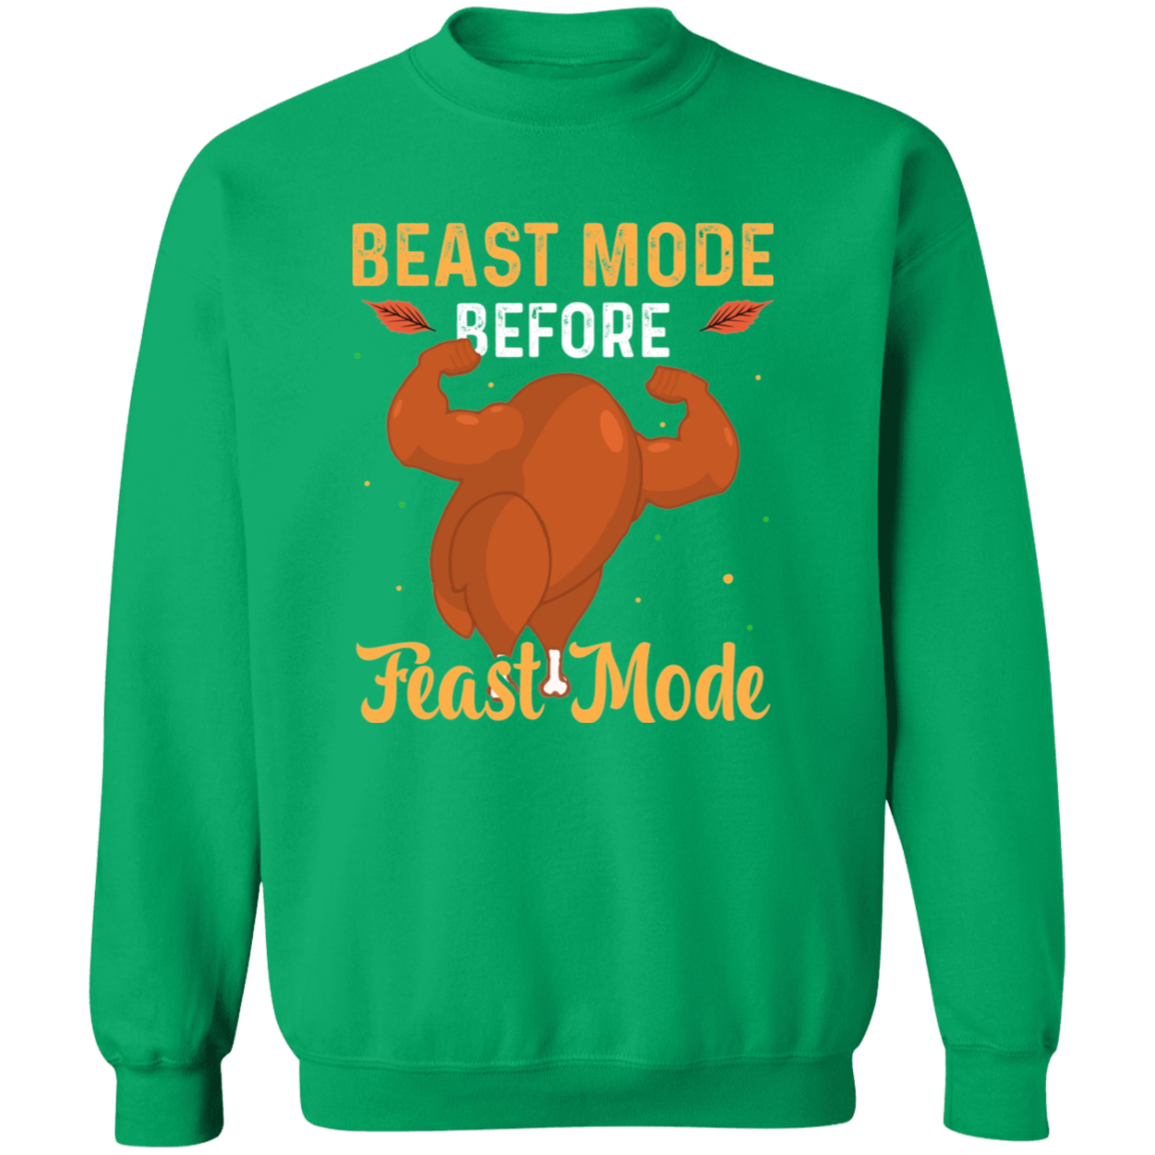 Beast Mode Before Feast Mode Sweatshirt